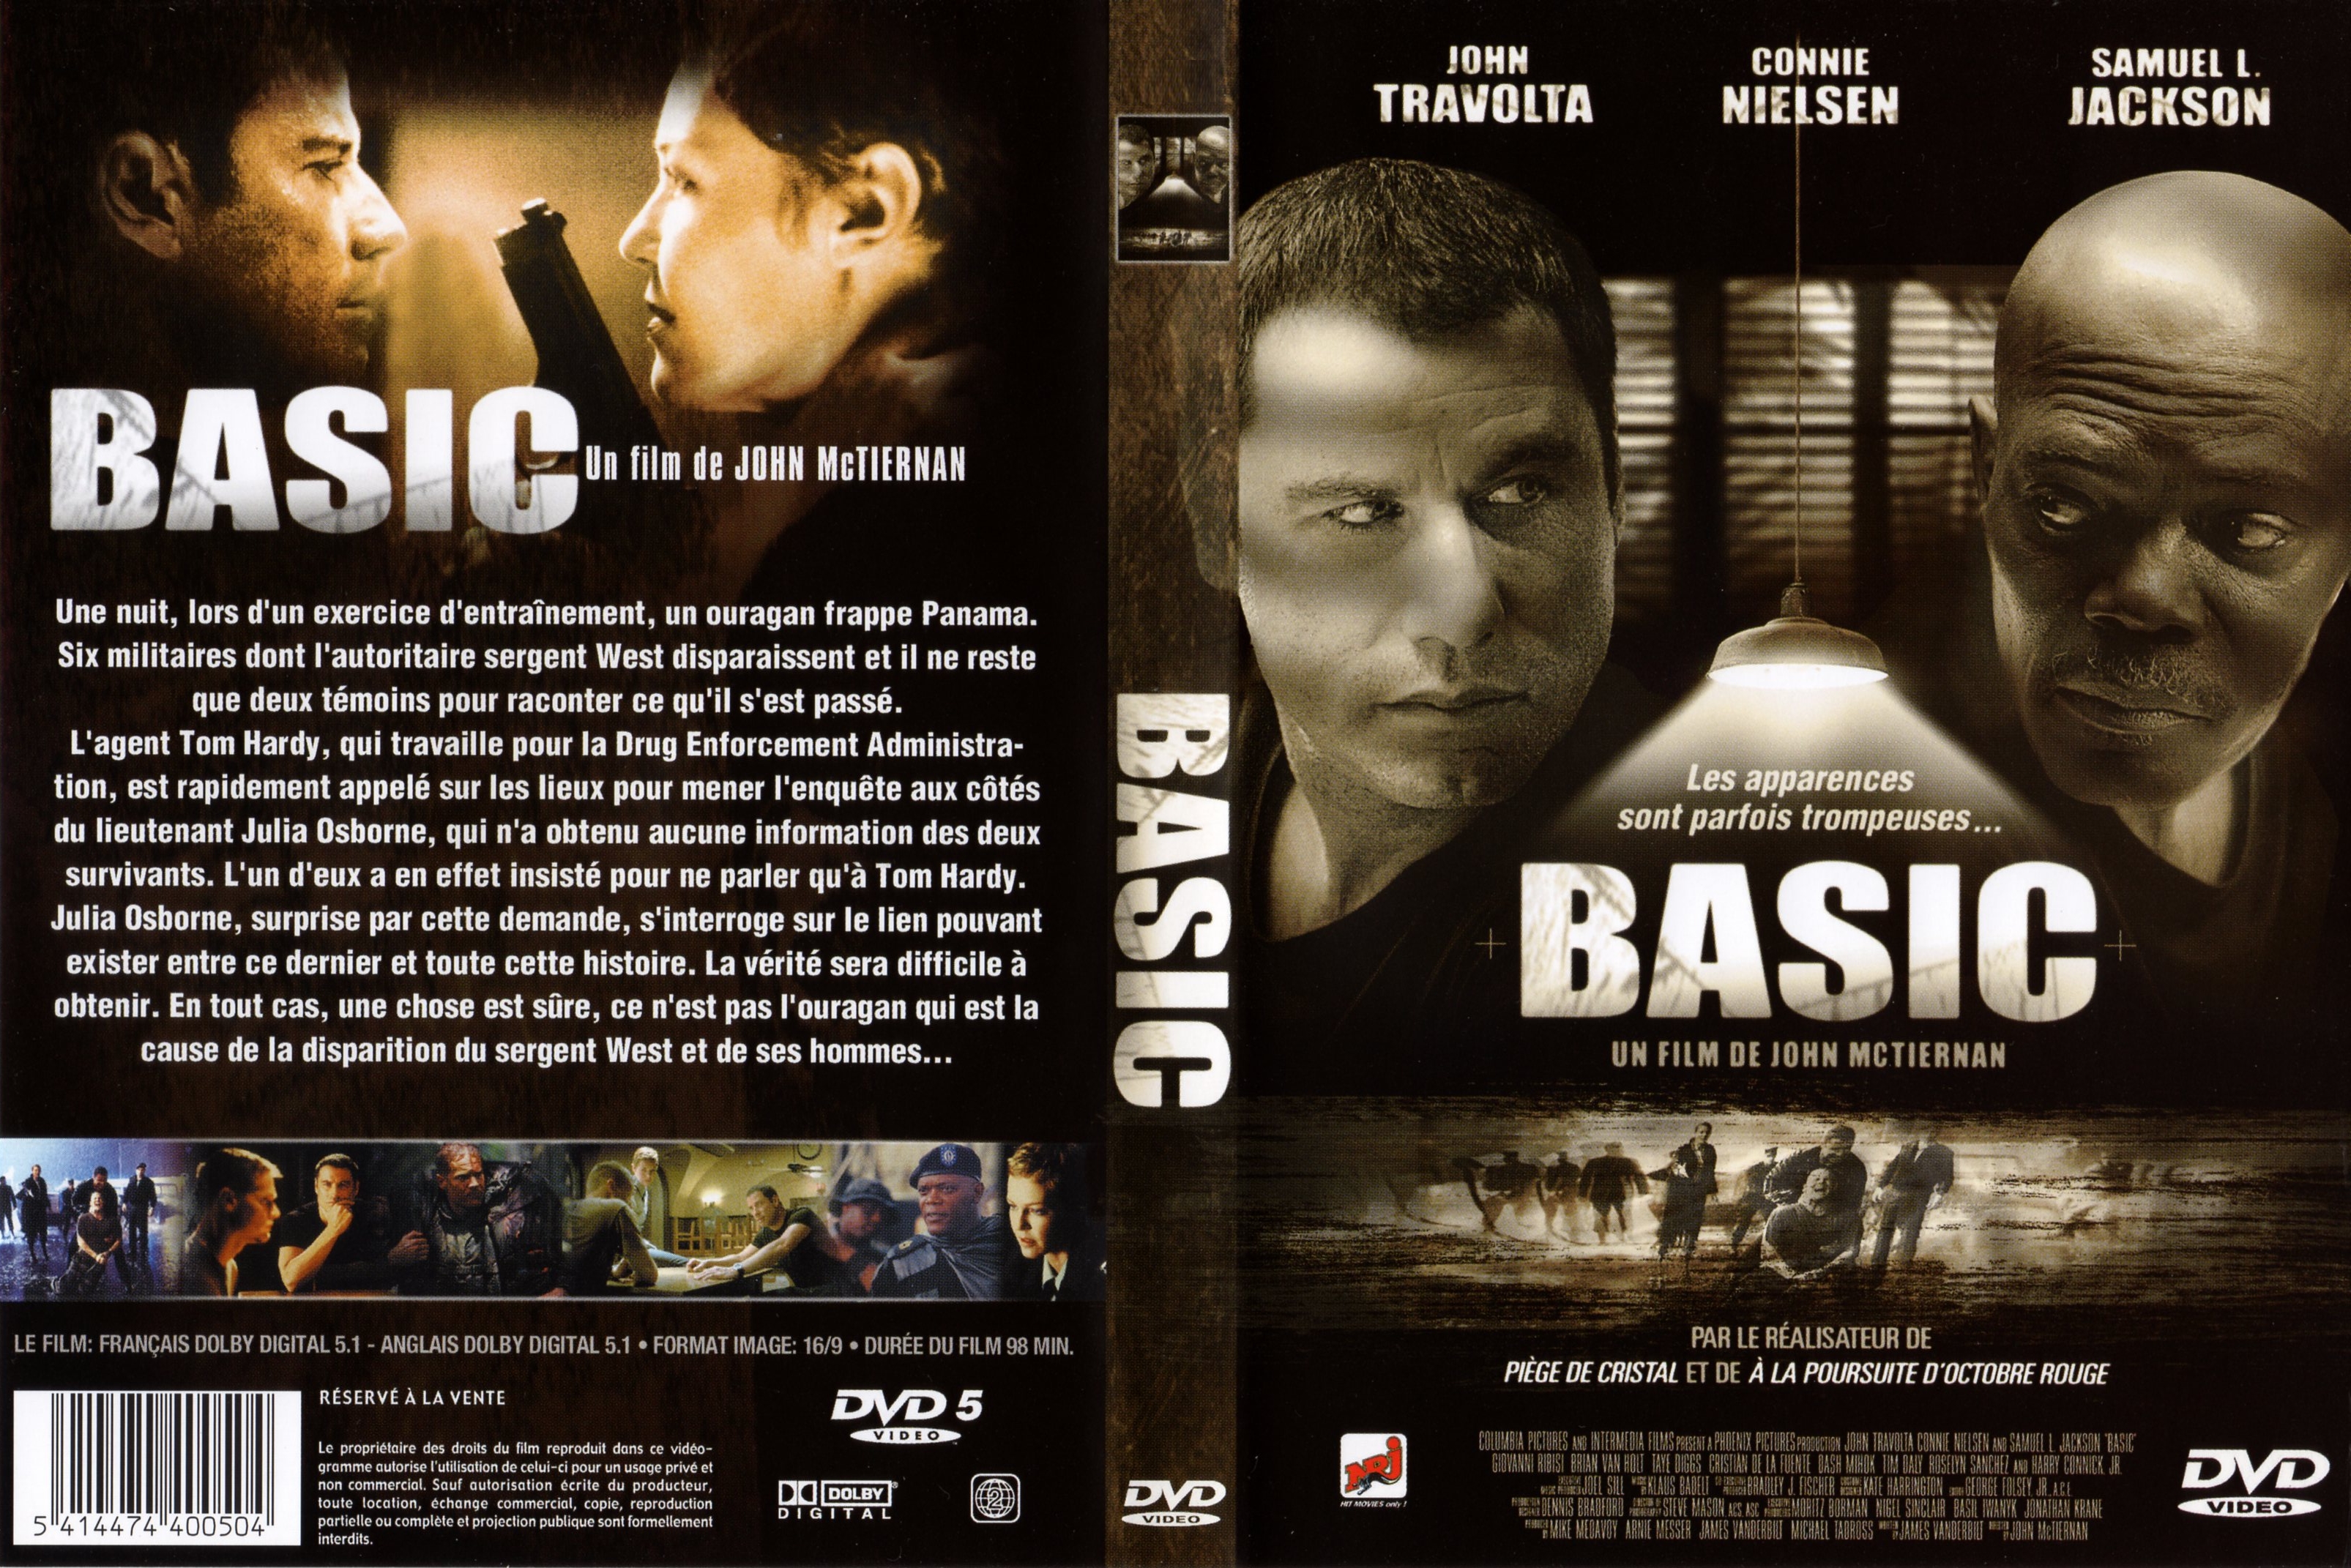 Jaquette DVD Basic v2